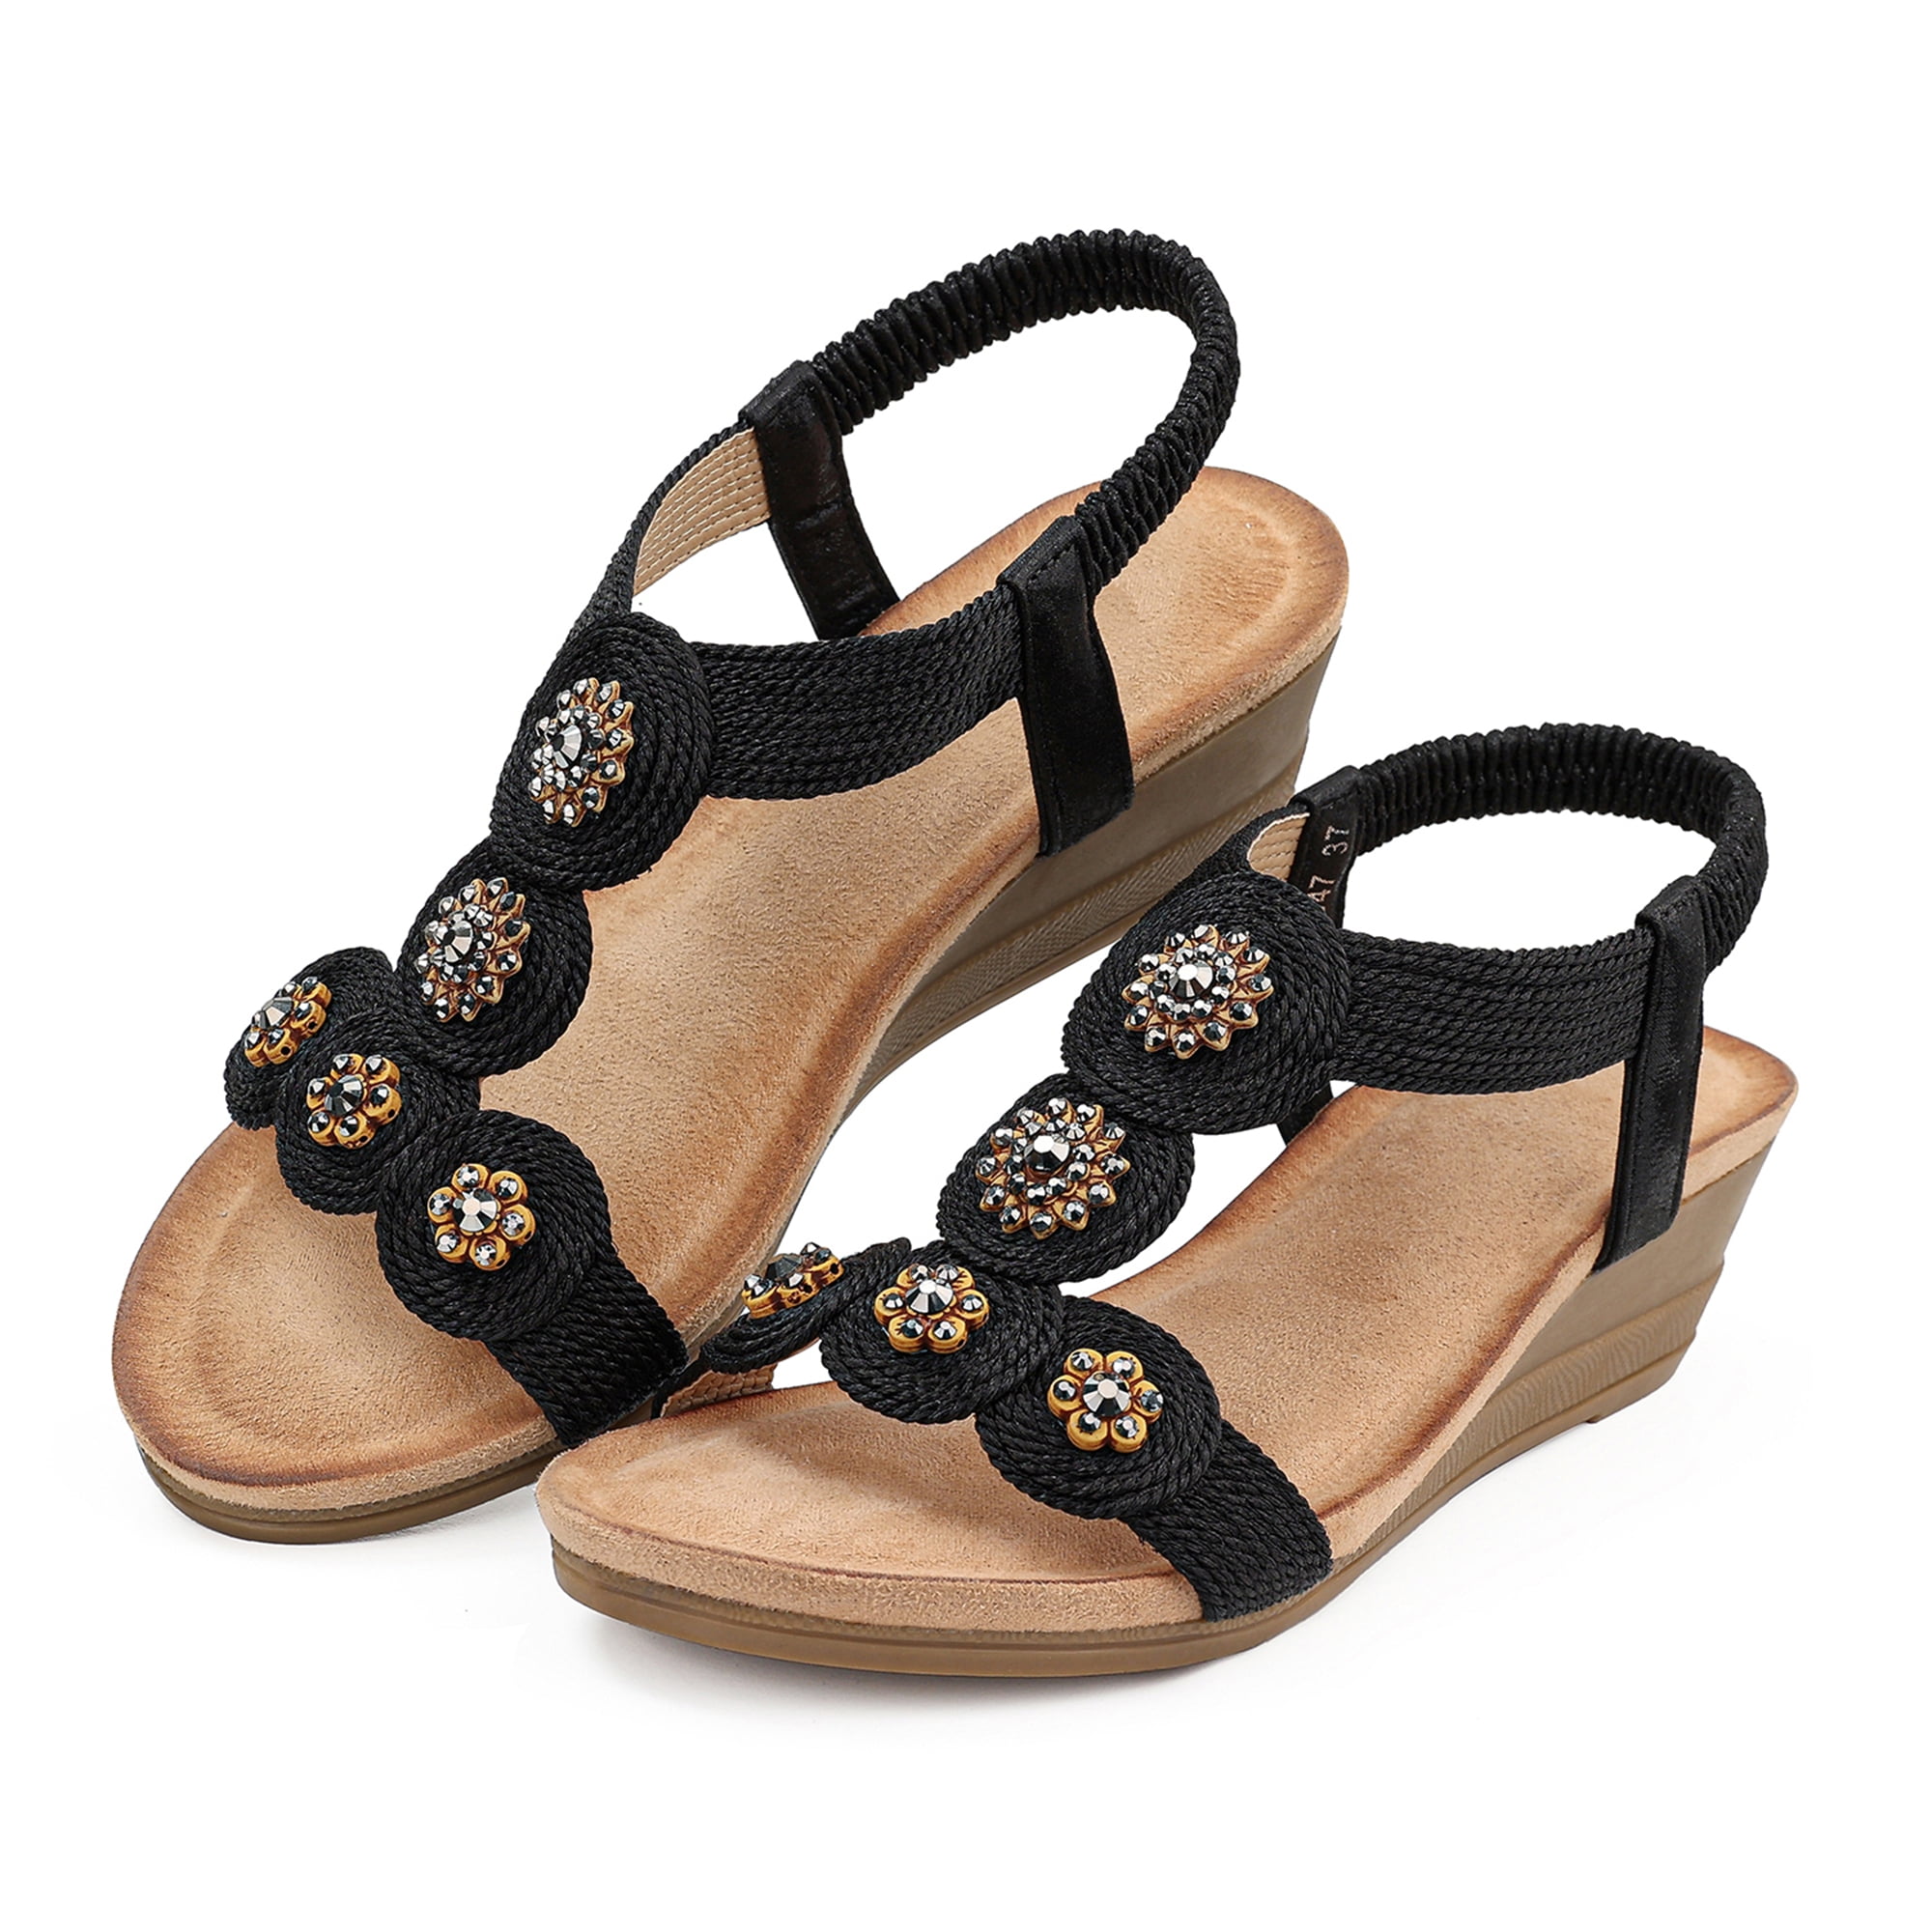 TEMOFON Sandals for Women Summer Wedge Elastic Ankle Strap Sandals Open ...